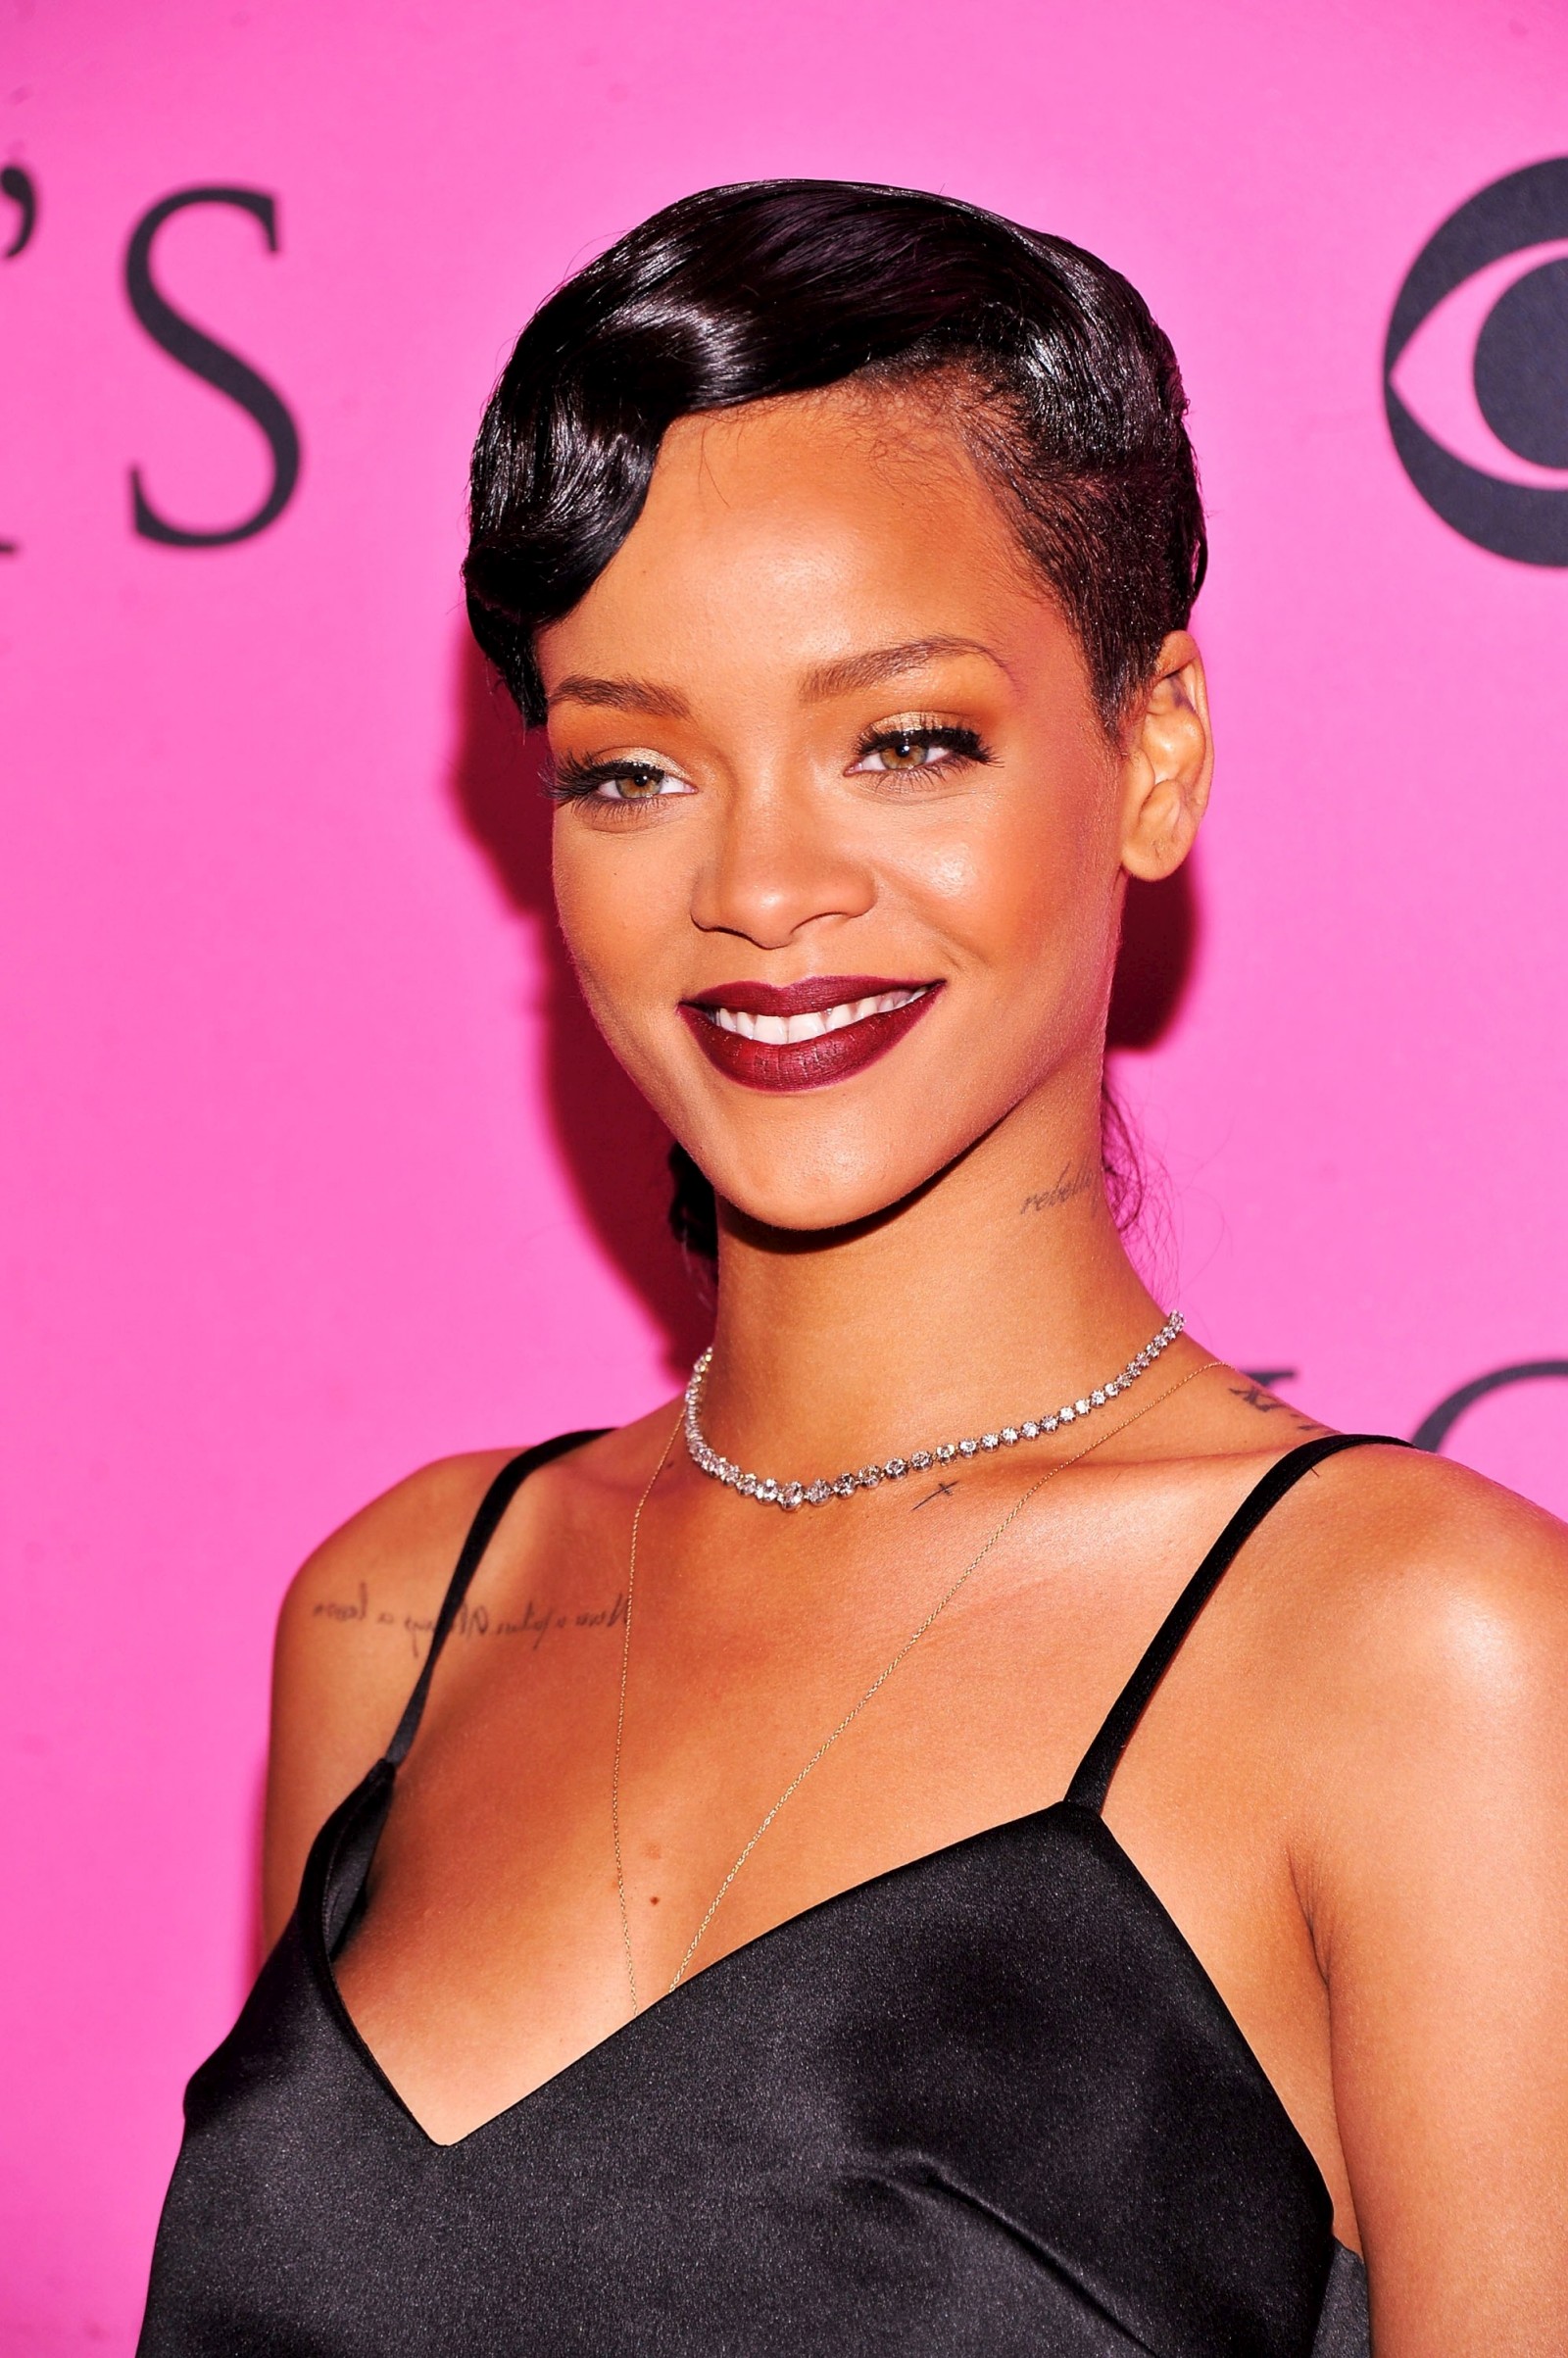 General photo of Rihanna